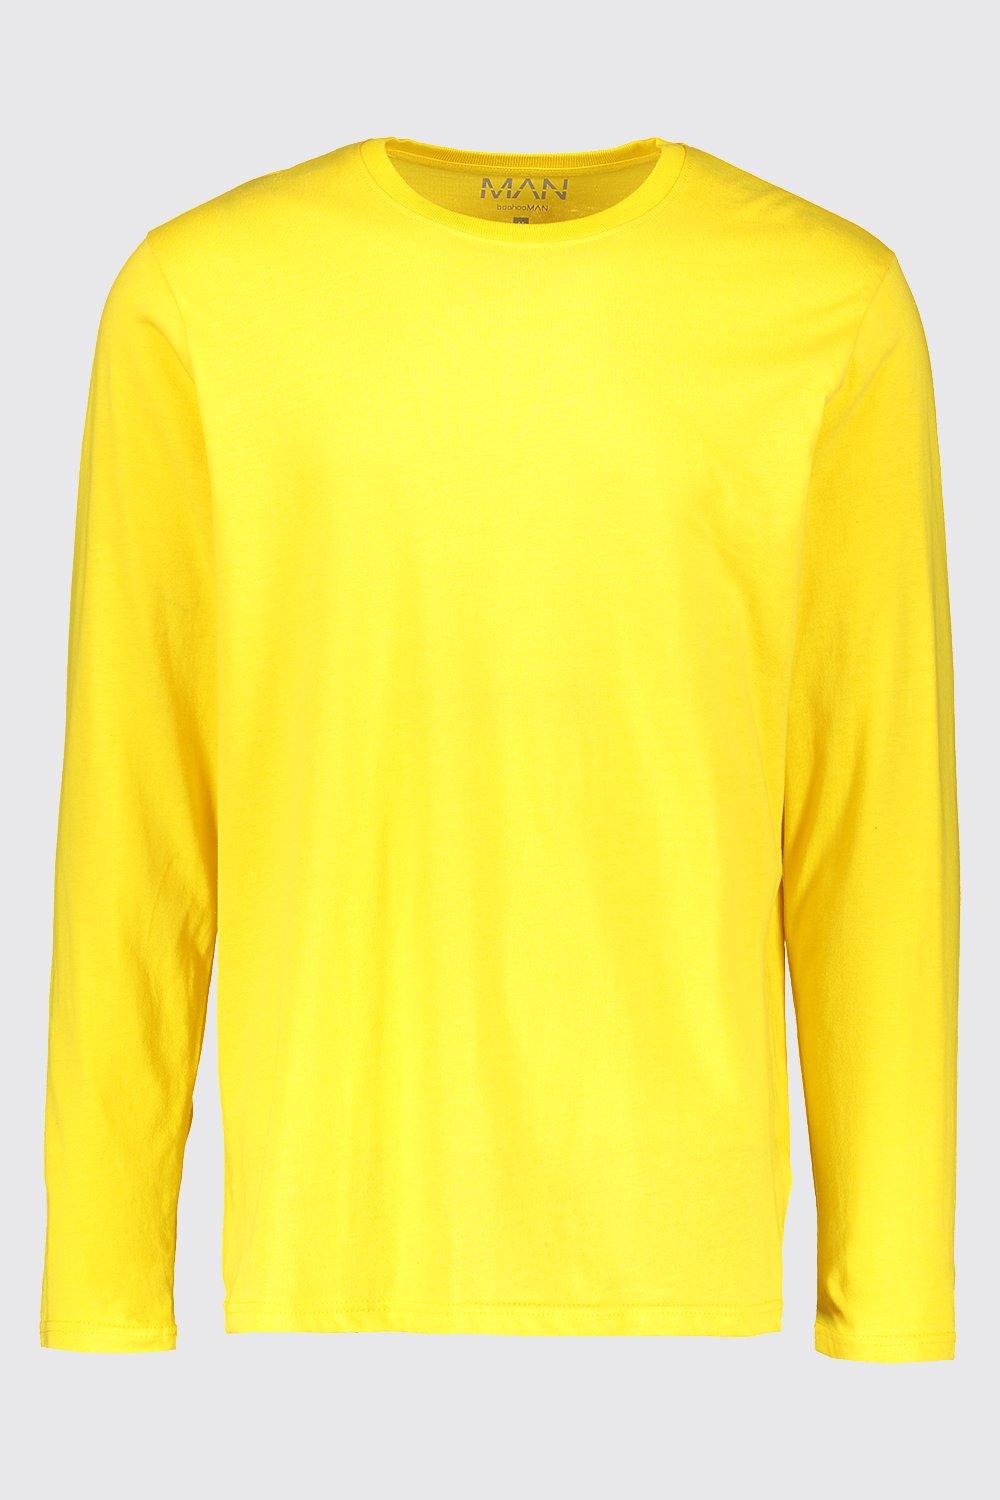 yellow long sleeve t shirt